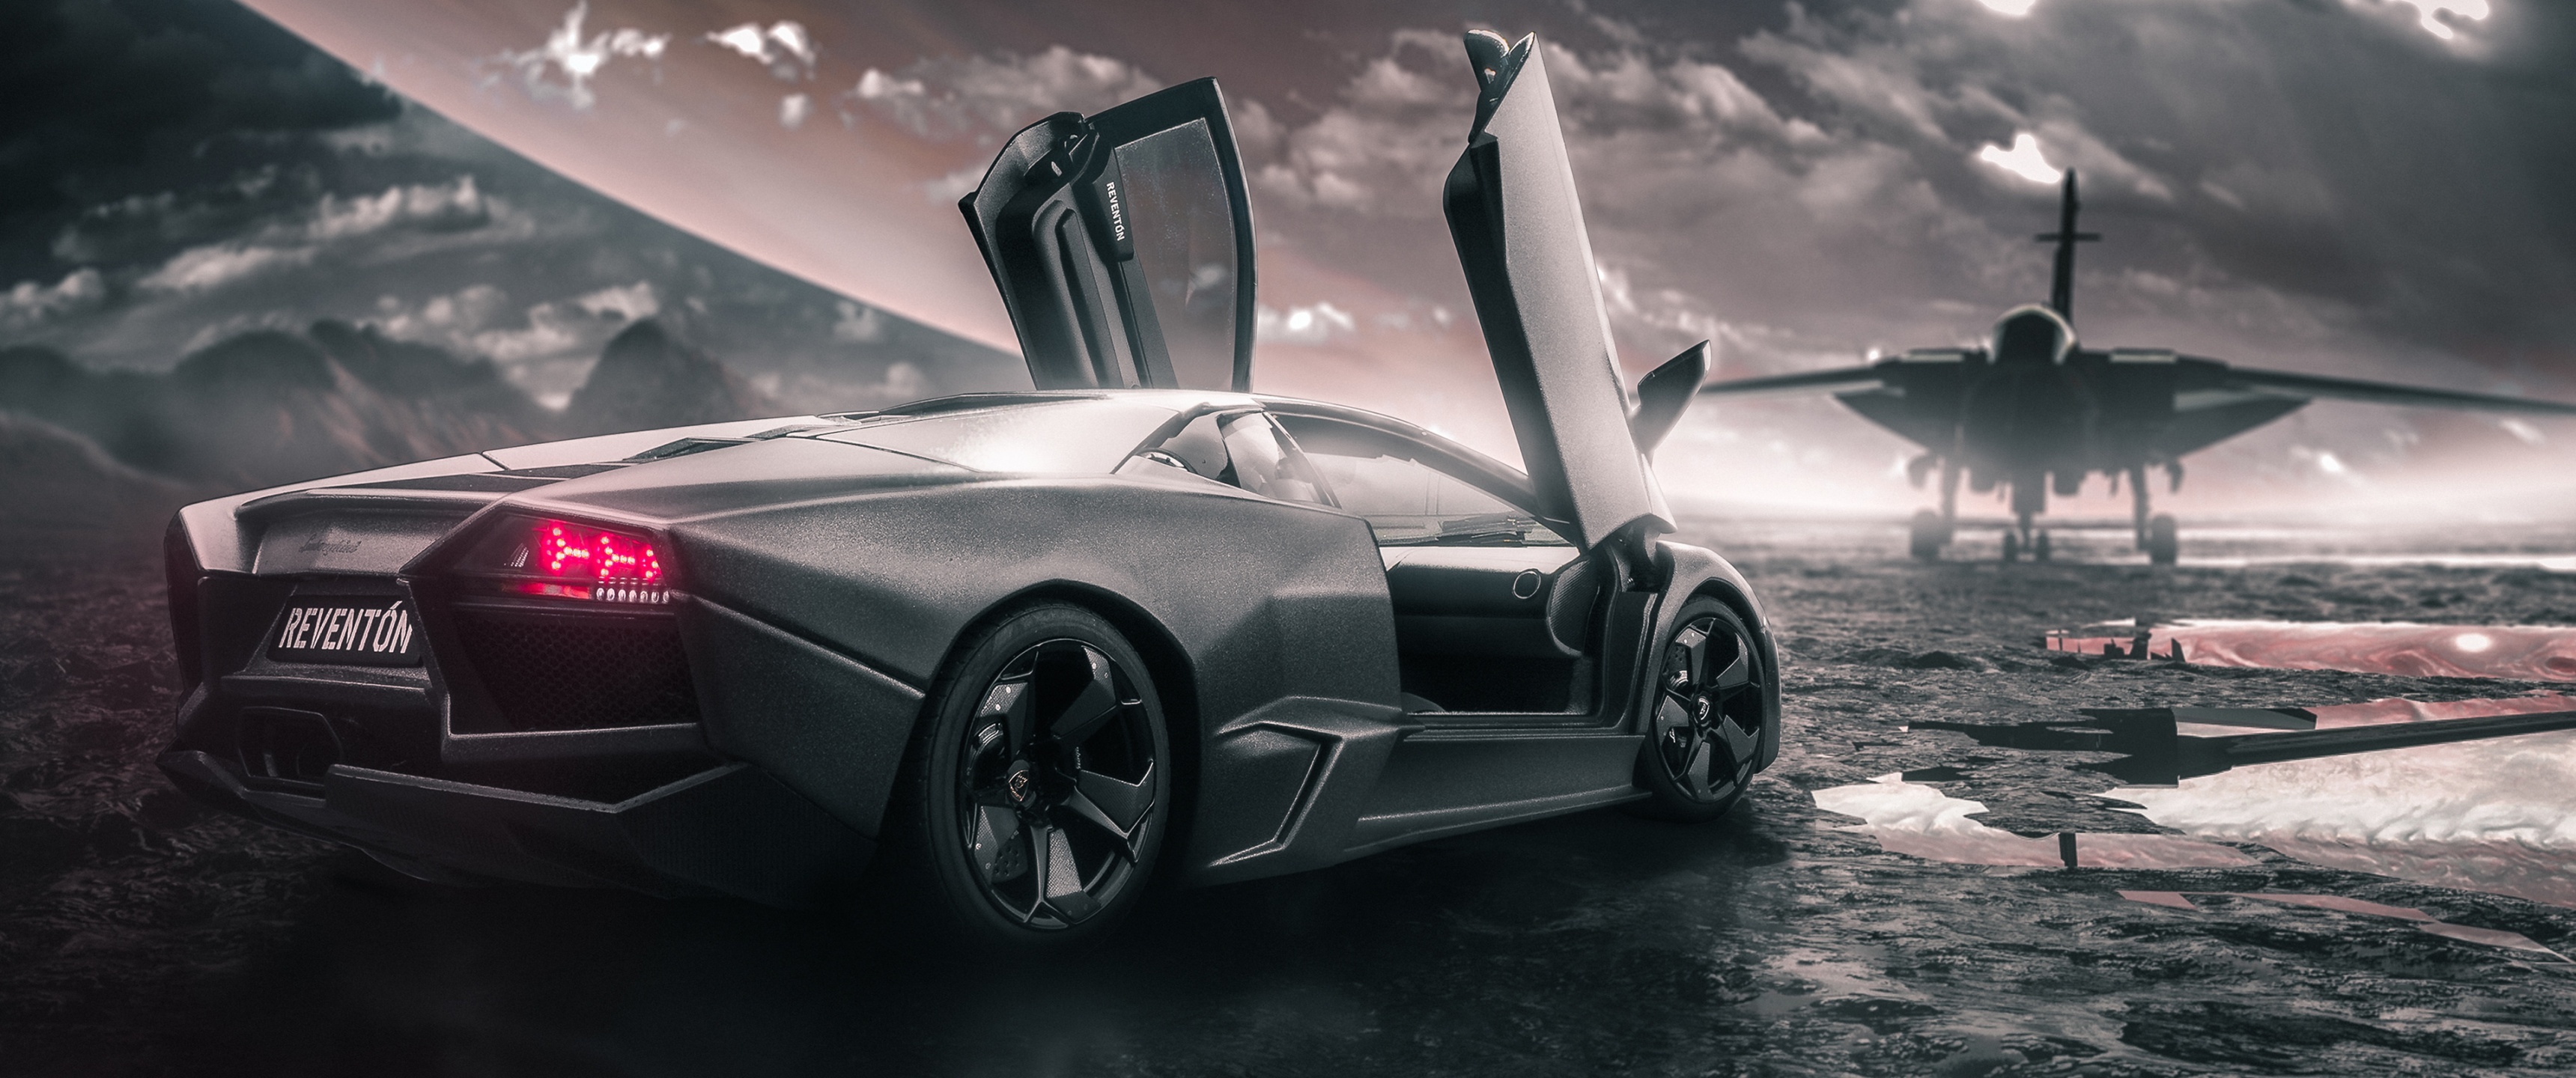 Jet Fighter-inspired, Lamborghini Reventon Wallpaper, 3440x1440 Dual Screen Desktop